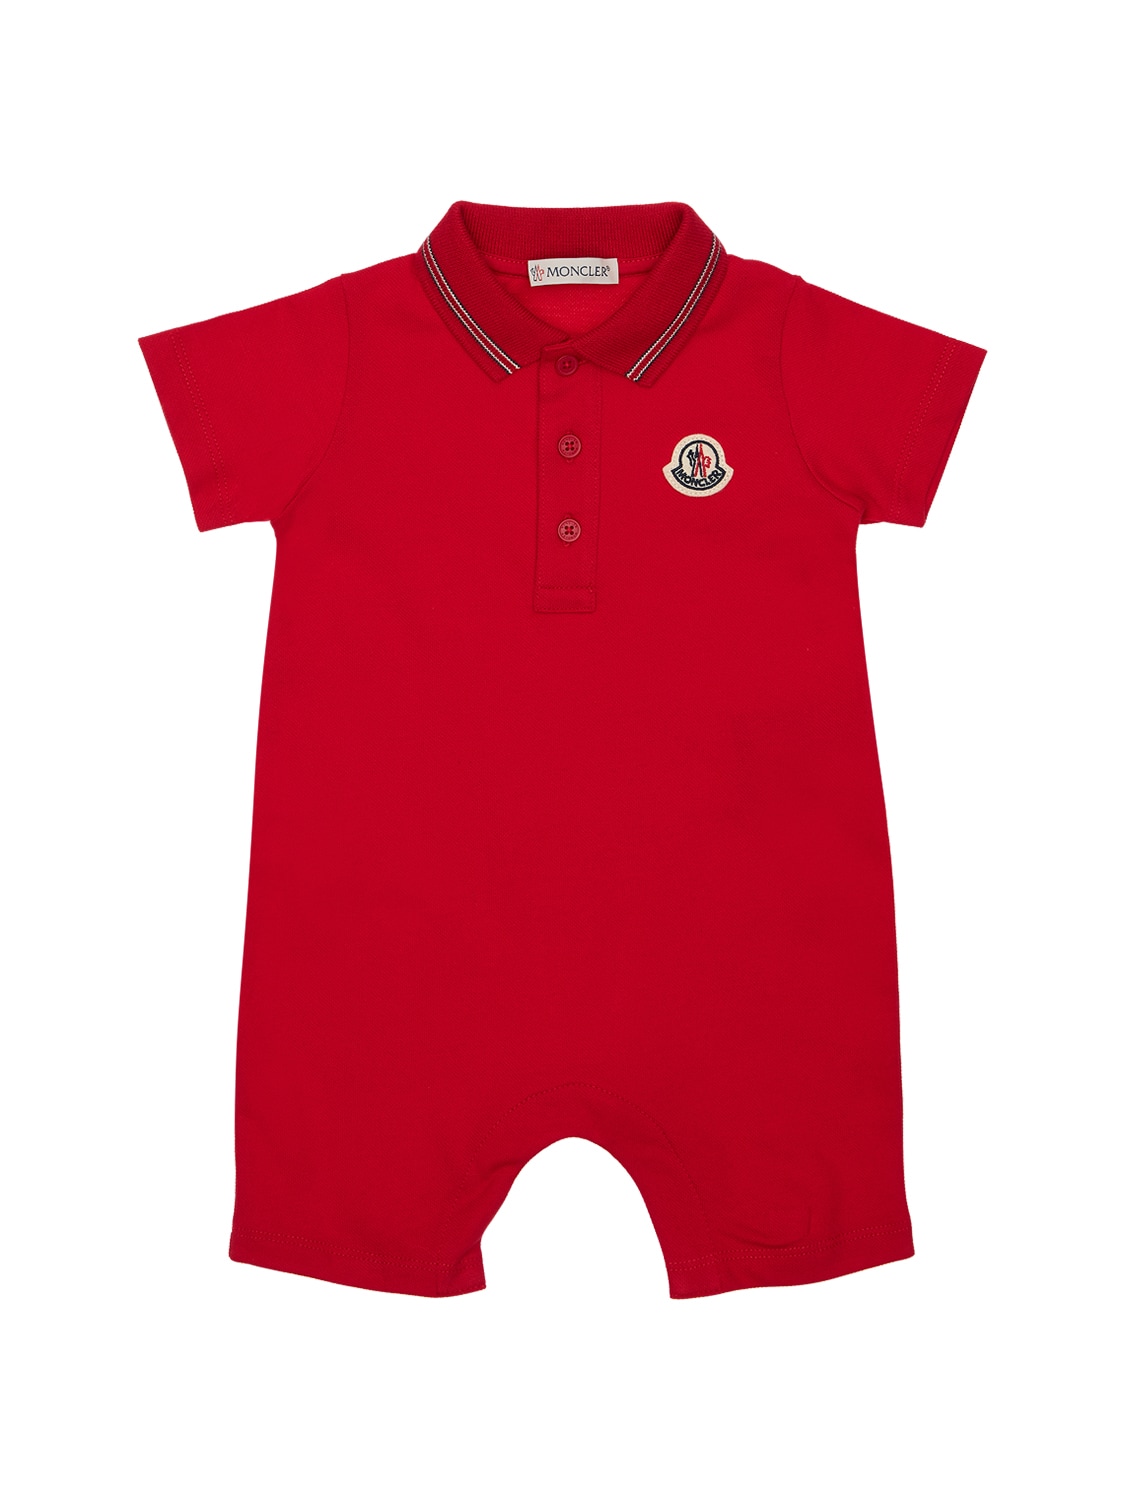 Moncler Babies' Cotton Piqué Romper In Red